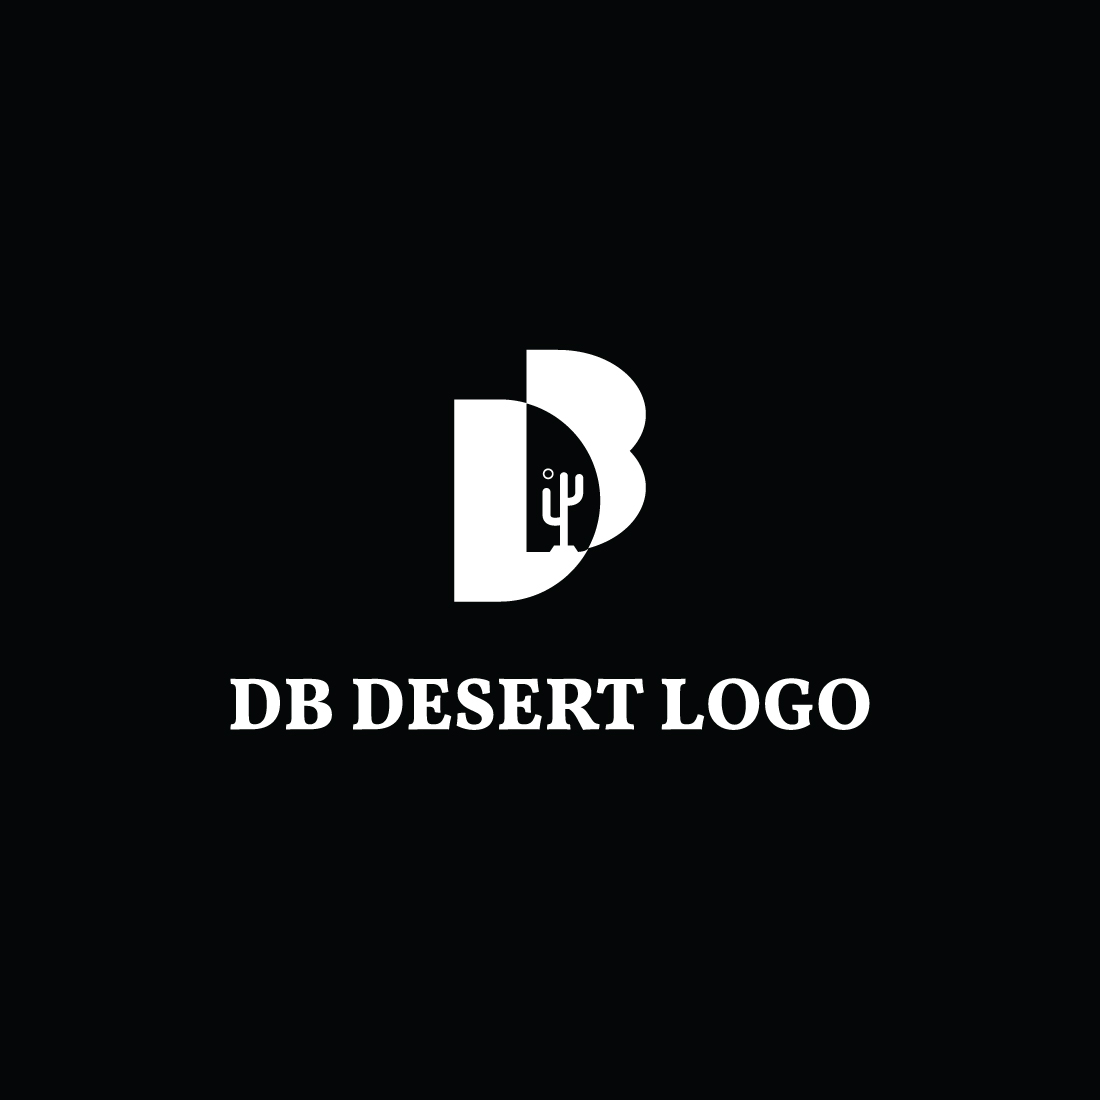 DB Letter Logo preview image.